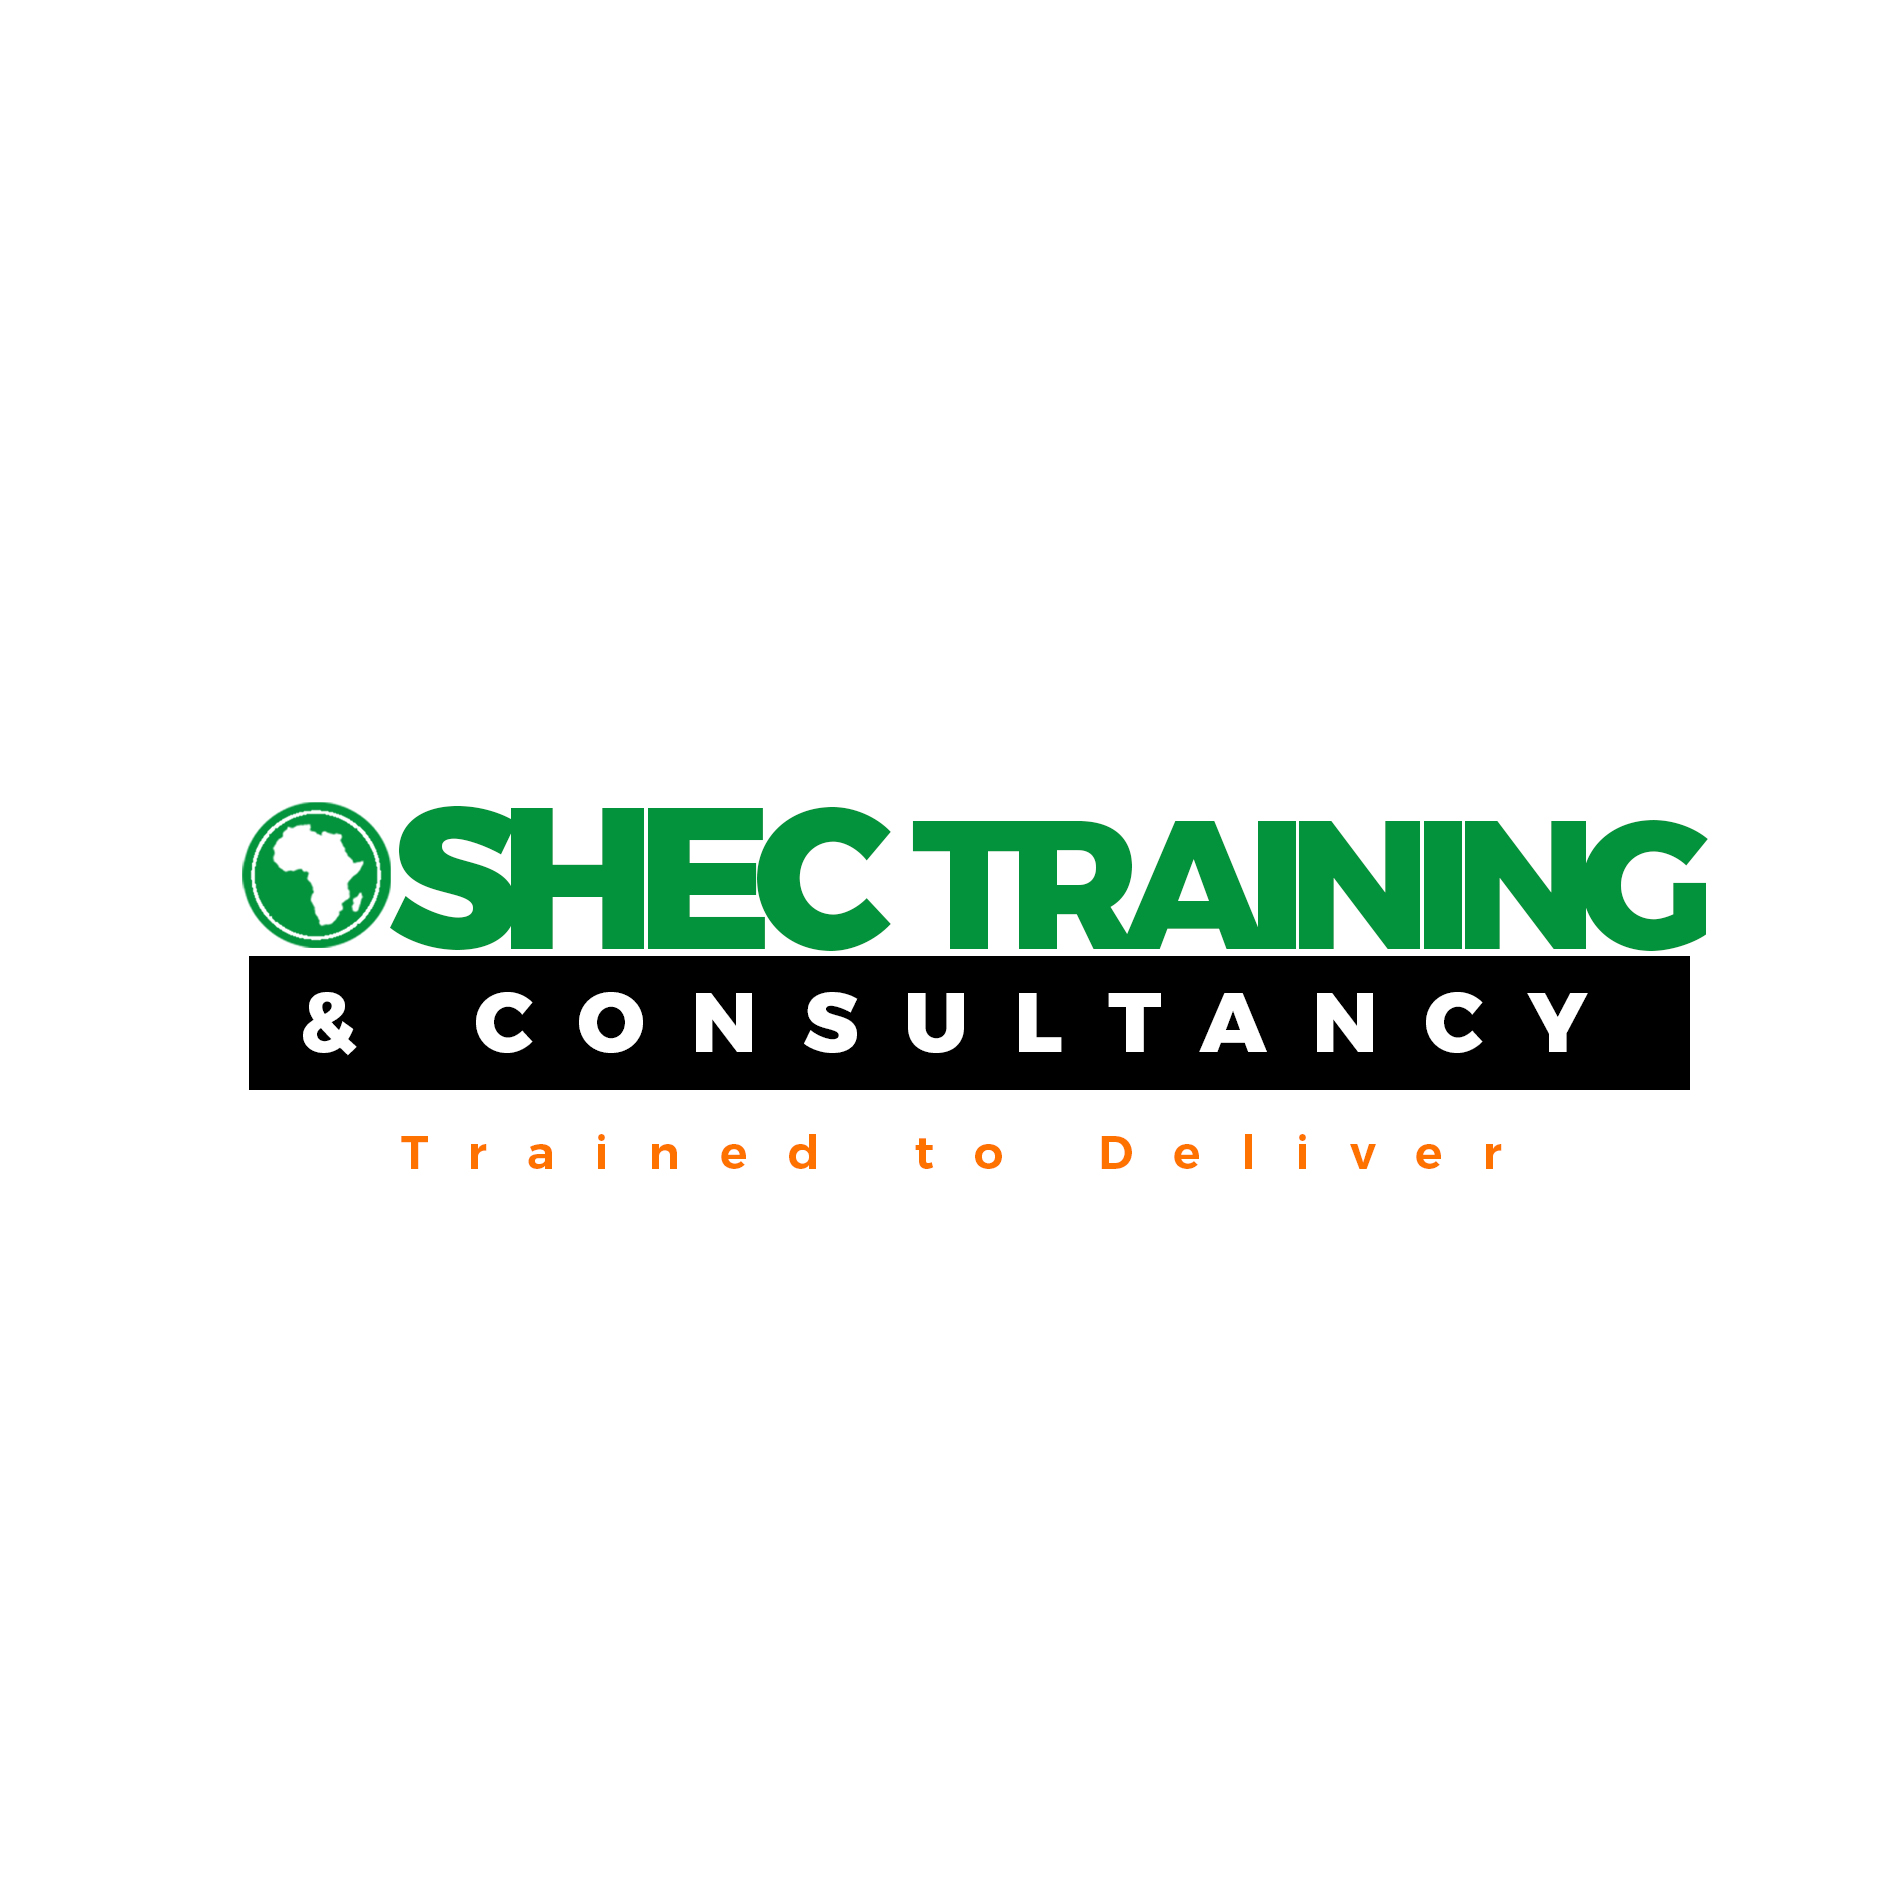 Oshec training